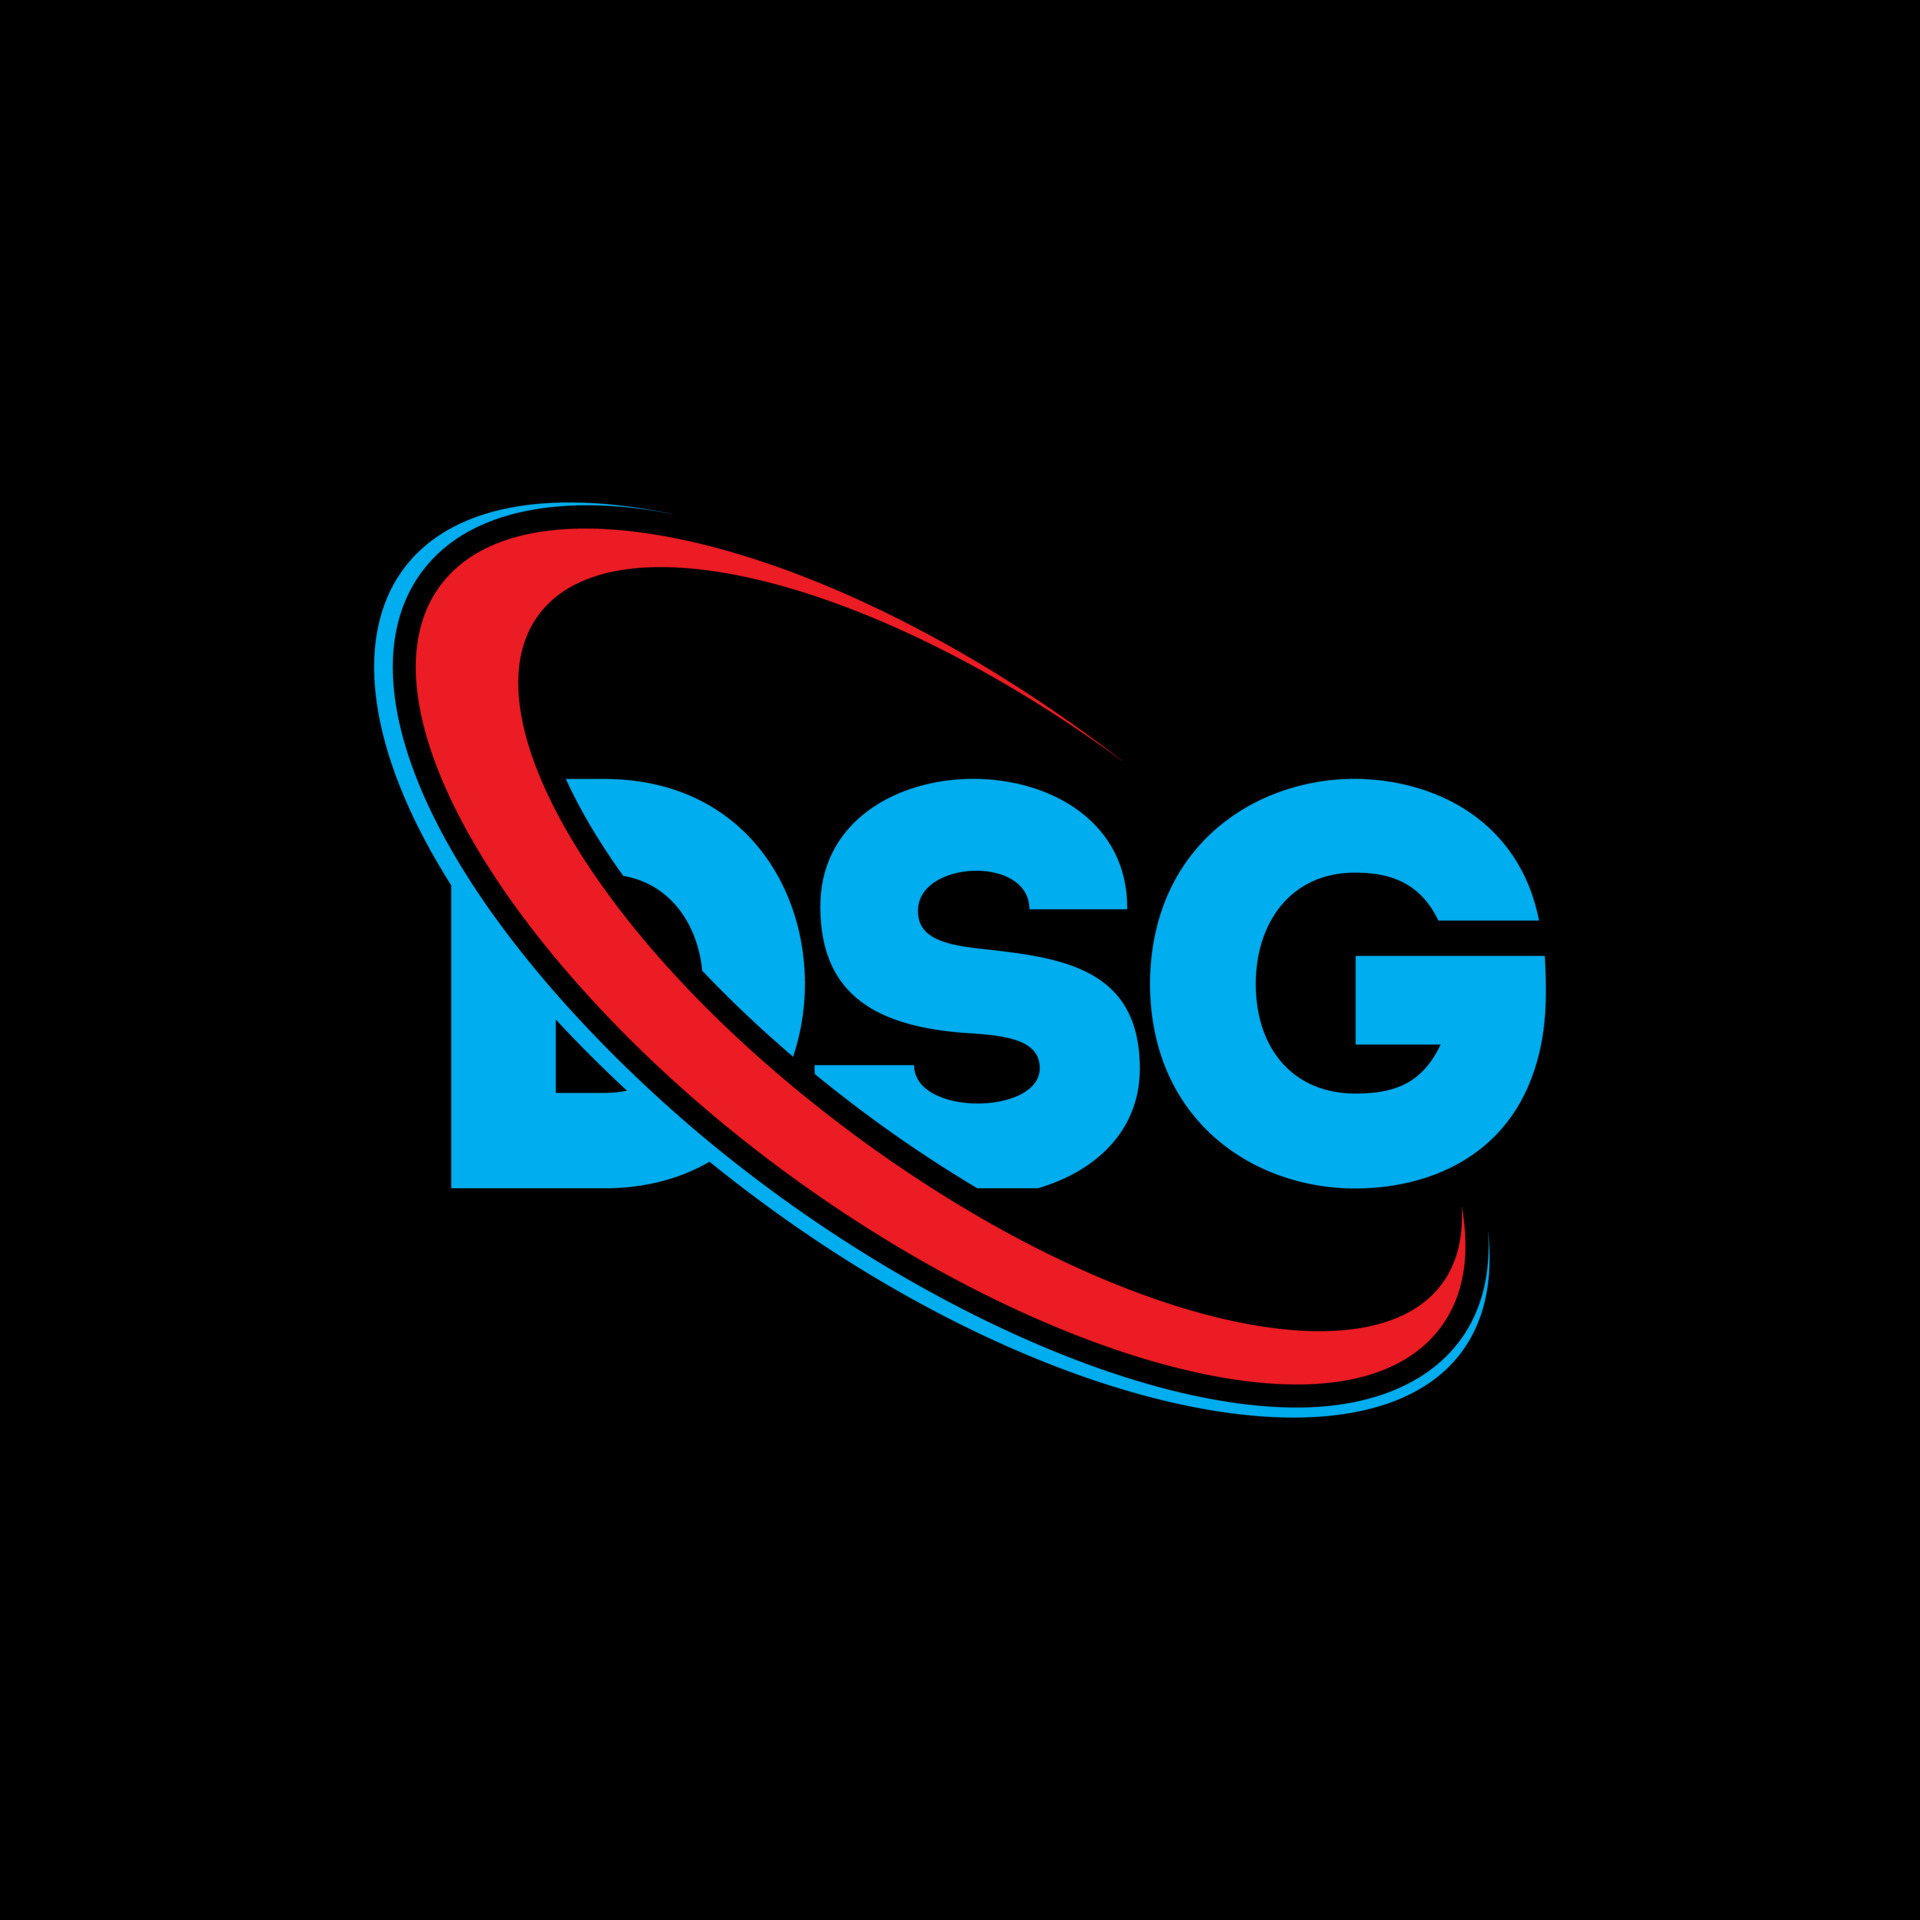 Dsg - logo design | Logo design contest | 99designs